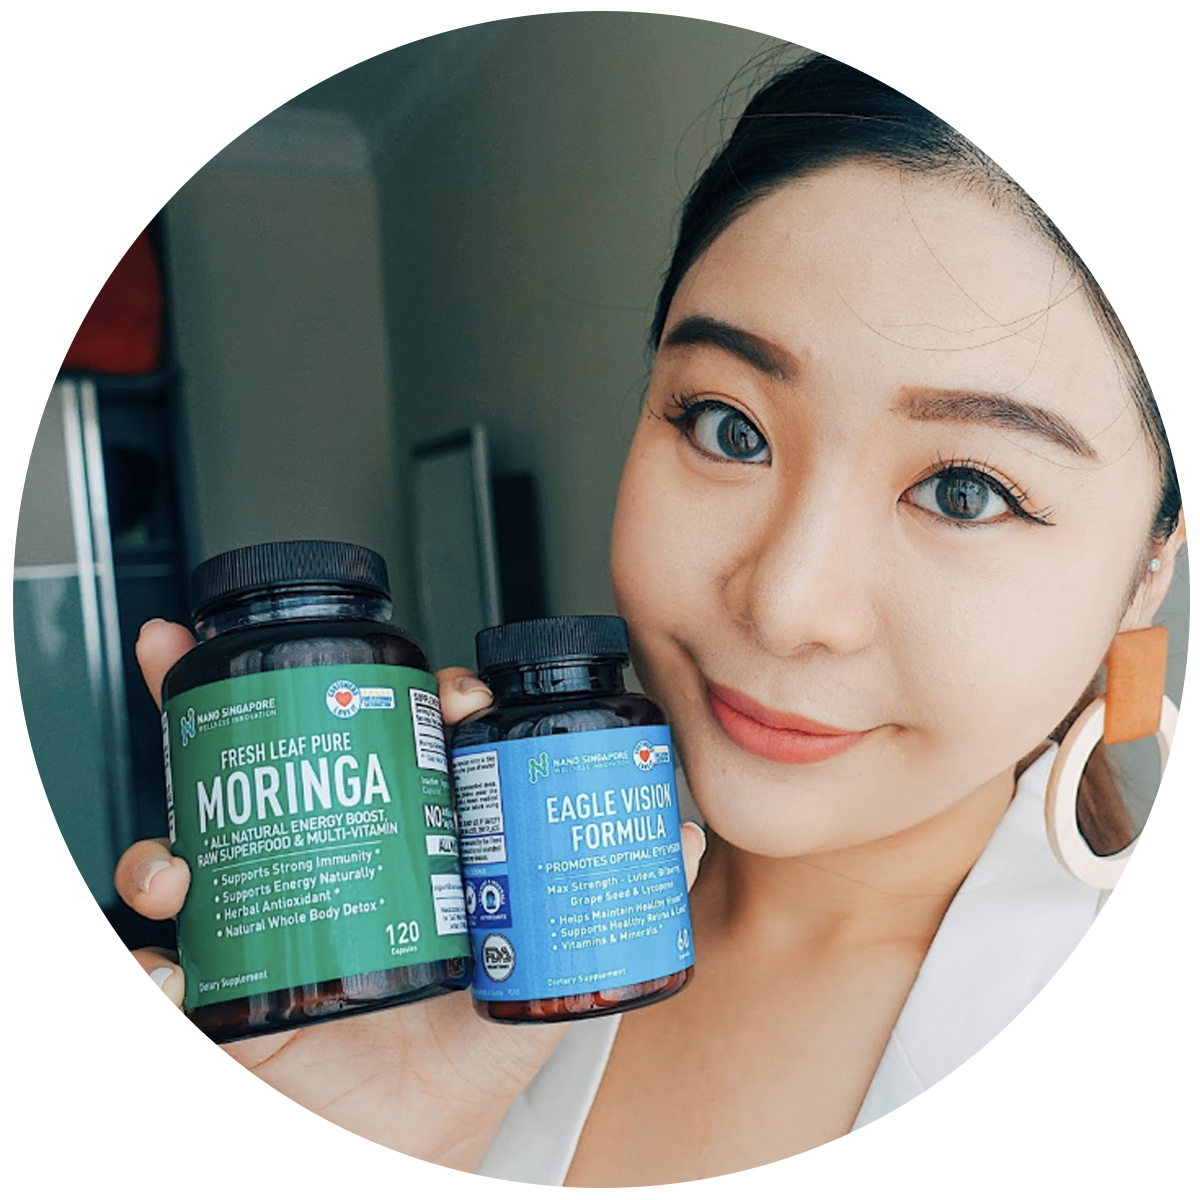 moringa capsules reviews made by shini lola, the wellness blogger